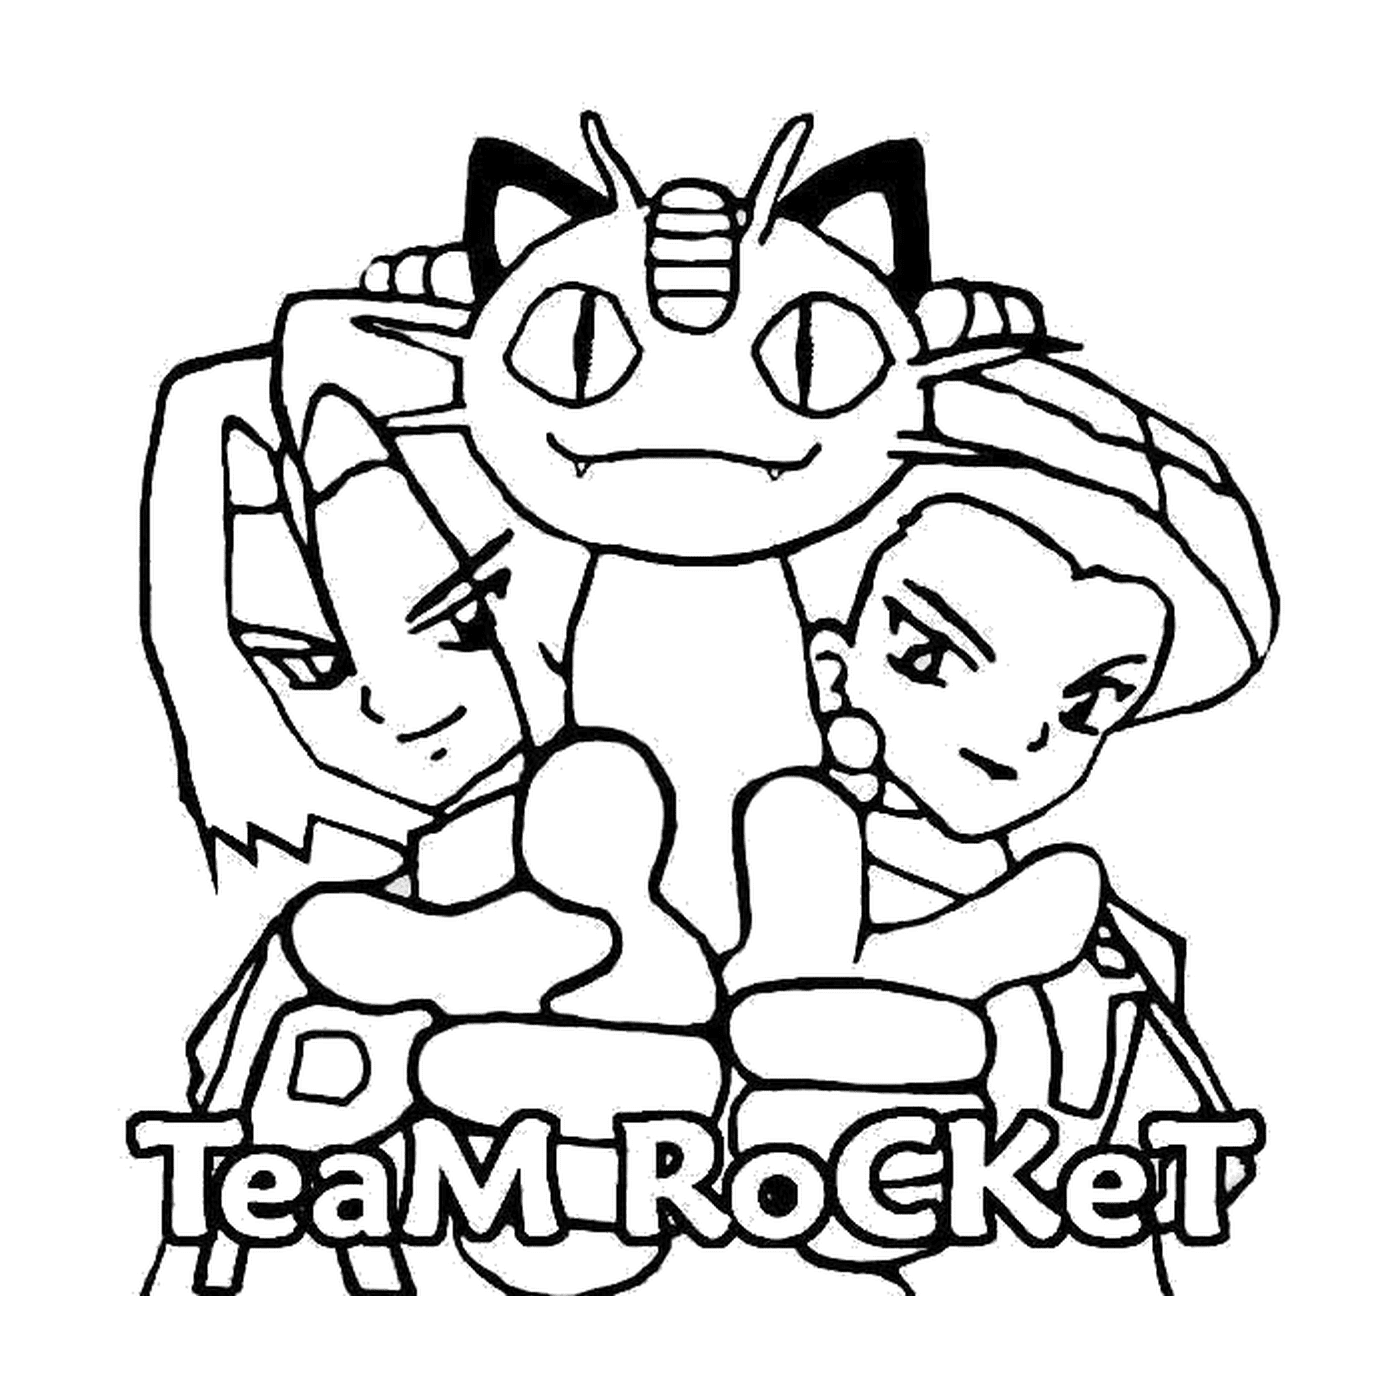   Team Rocket : Groupe de méchants 